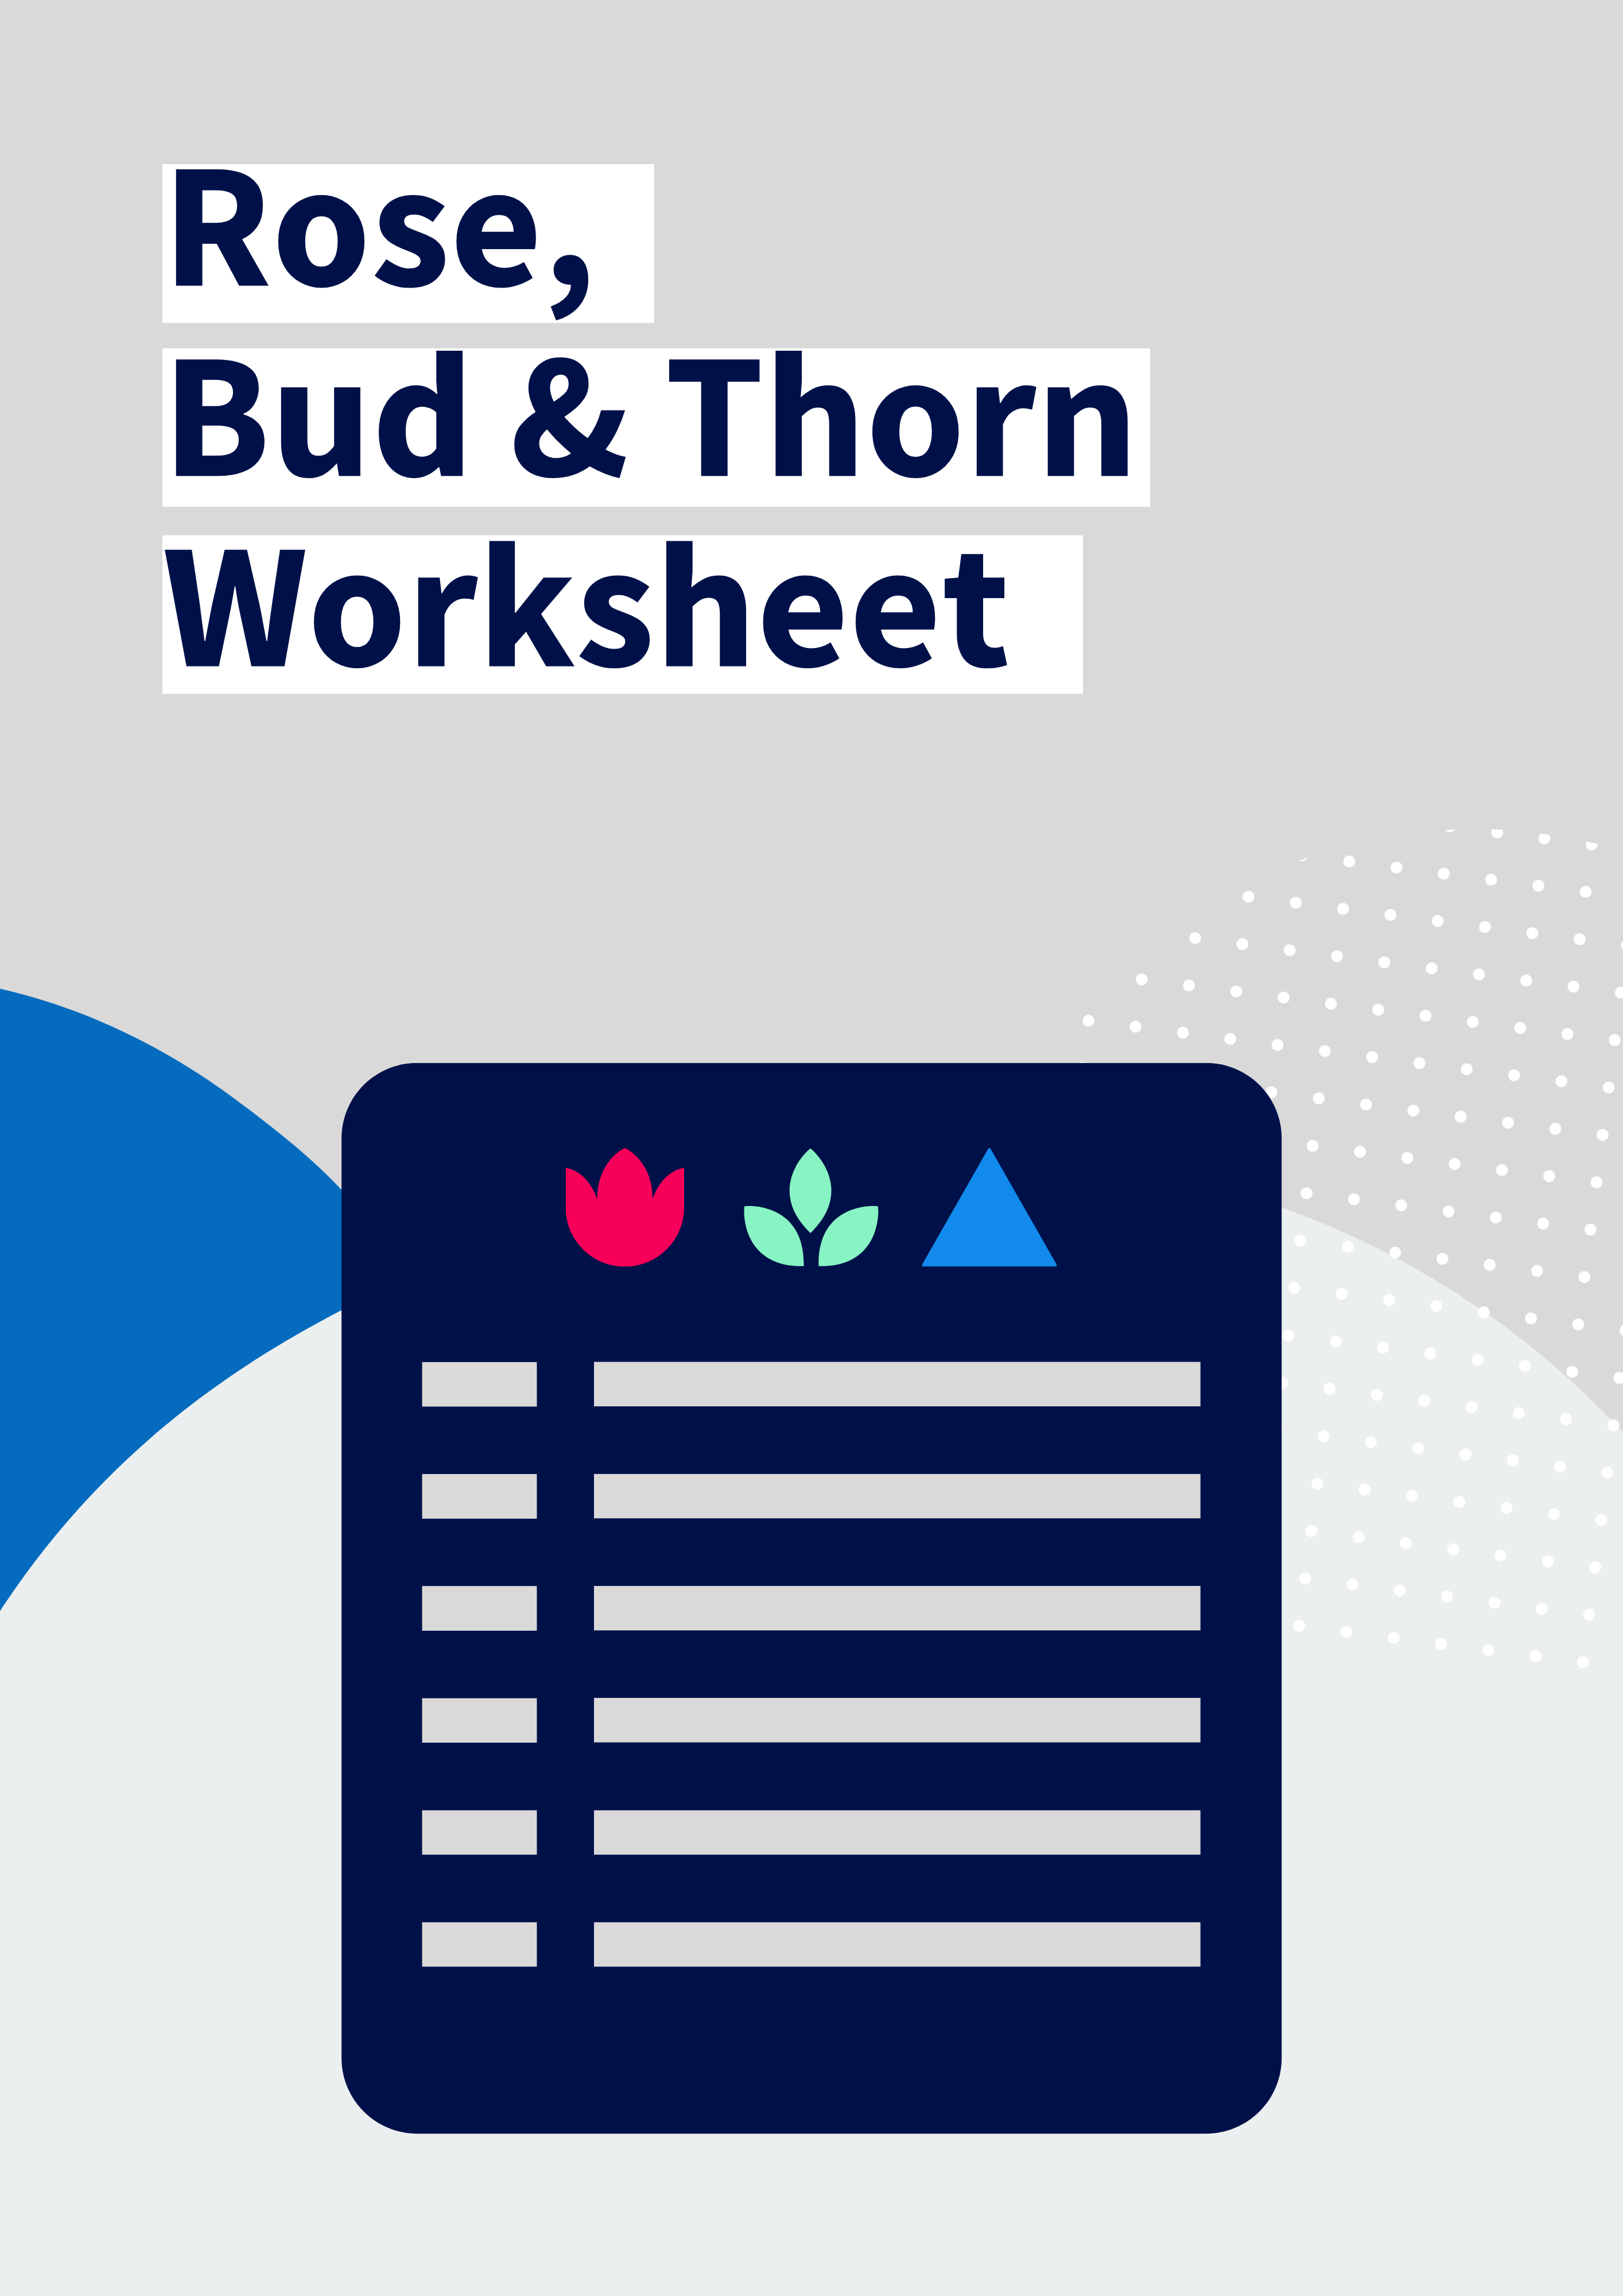 Rose, Bud & Thorn Worksheet